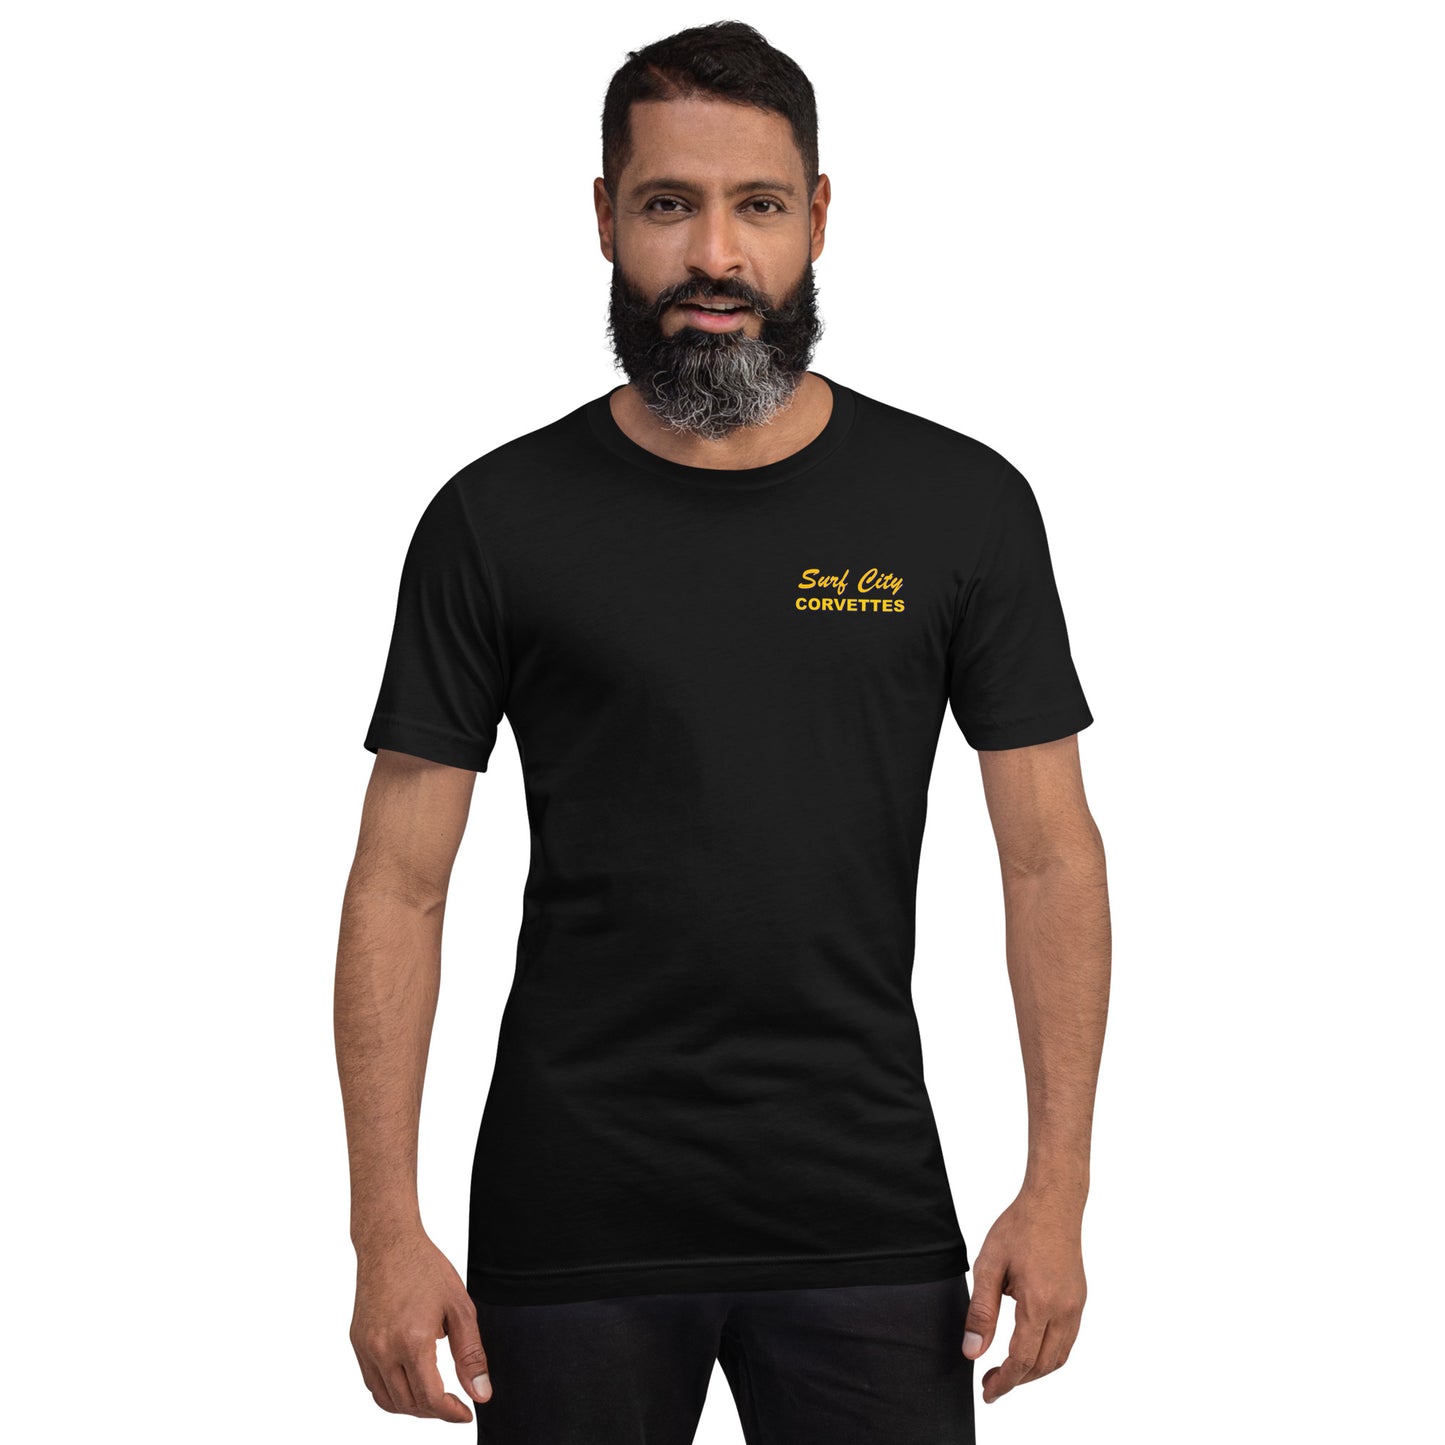 Surf City Corvettes T-Shirt - Black